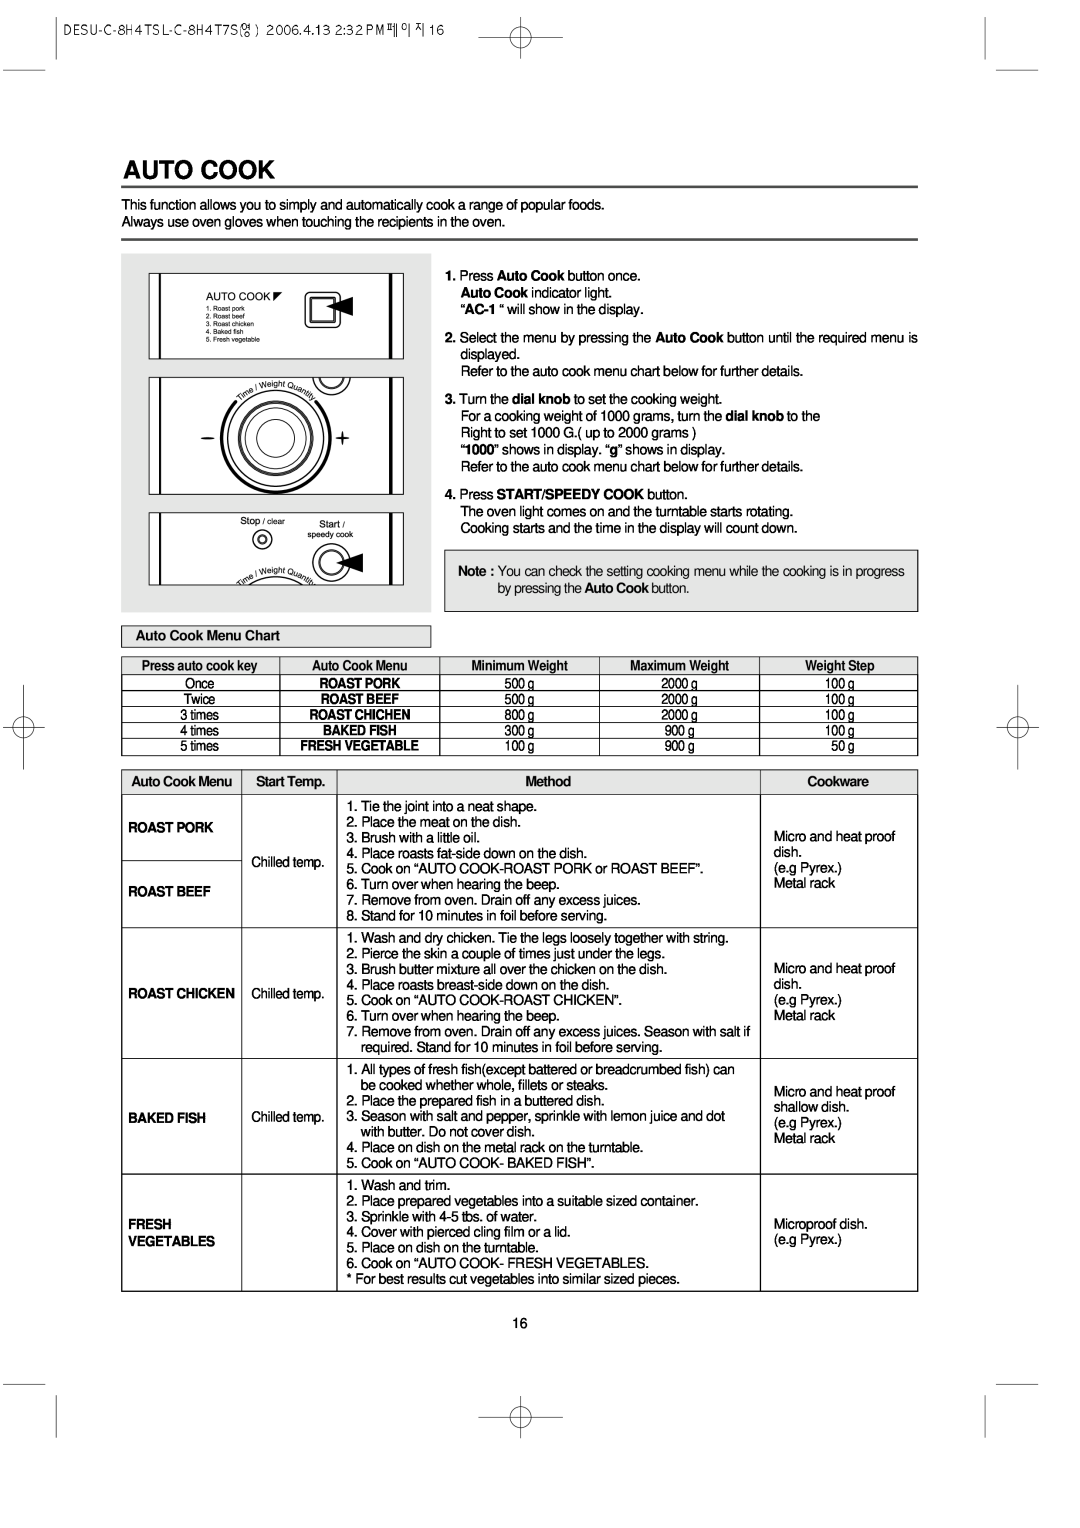 Daewoo KOC-8H4TSL Auto Cook Menu Chart, Press START/SPEEDY COOK button, Press auto cook key, Minimum Weight, Method 